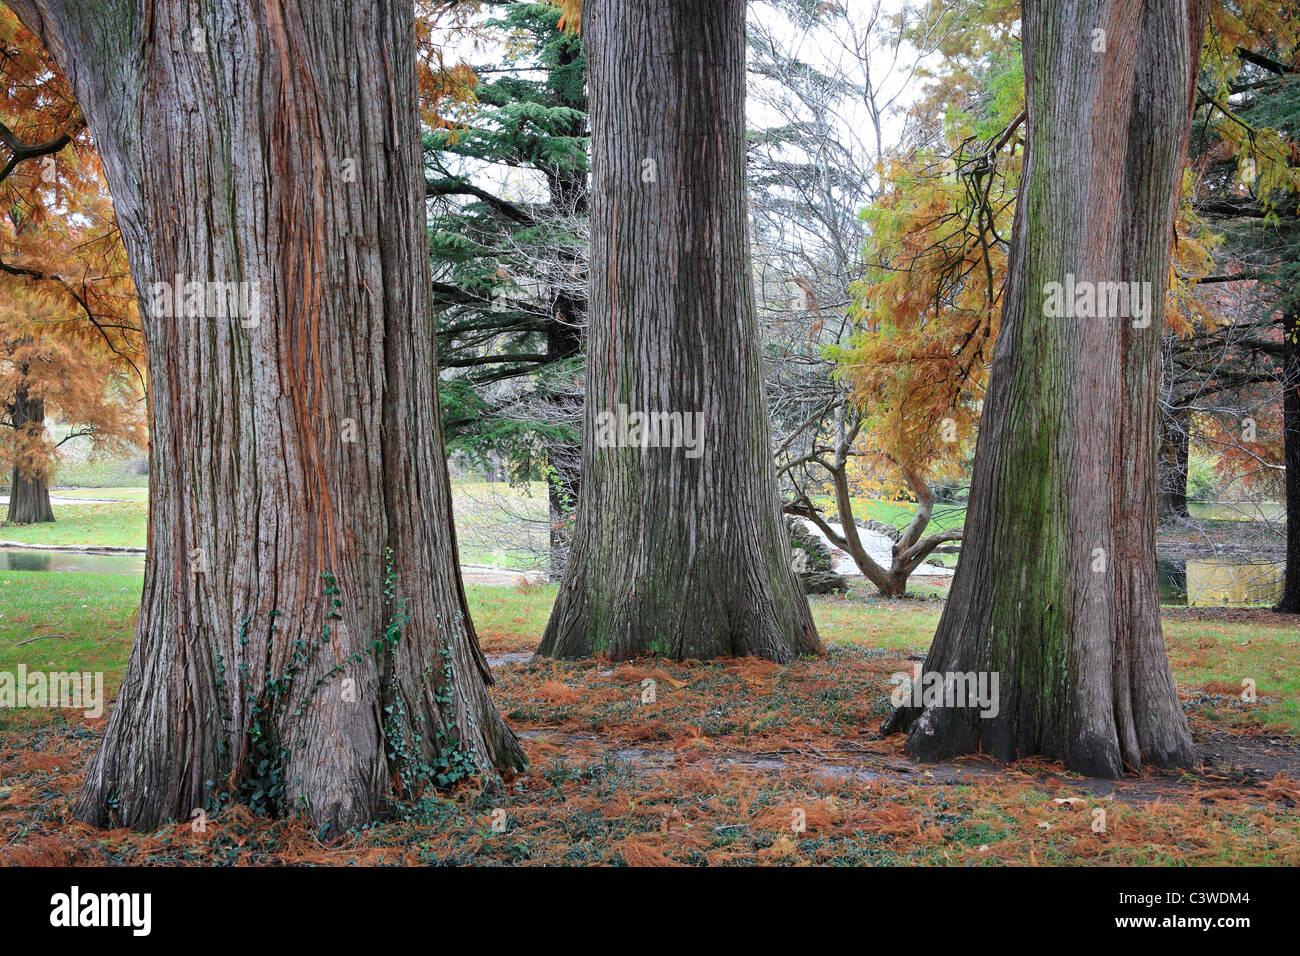 Three Stately Trunks Of The Eastern Red Cedar Tree In Autumn, Southwestern Ohio, USA, Juniperus virginiana Stock Photo